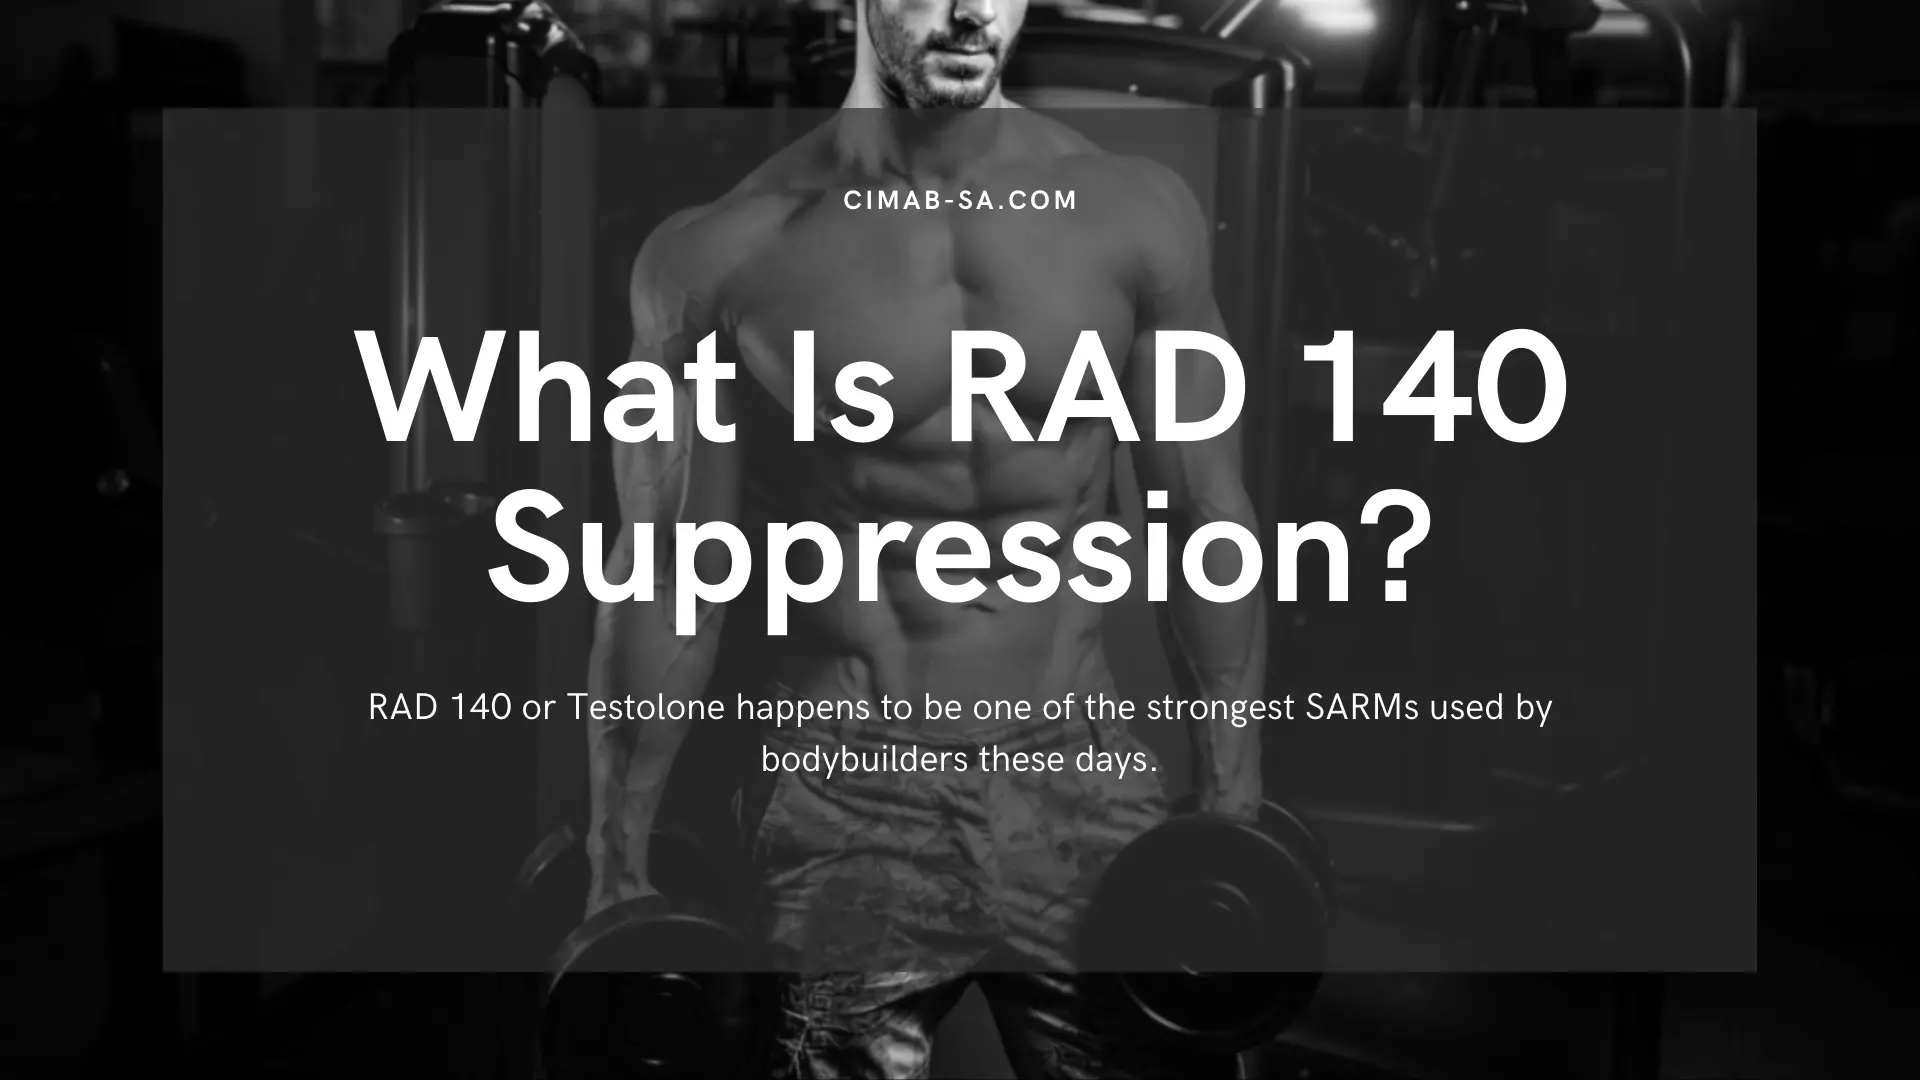 RAD 140 Suppression